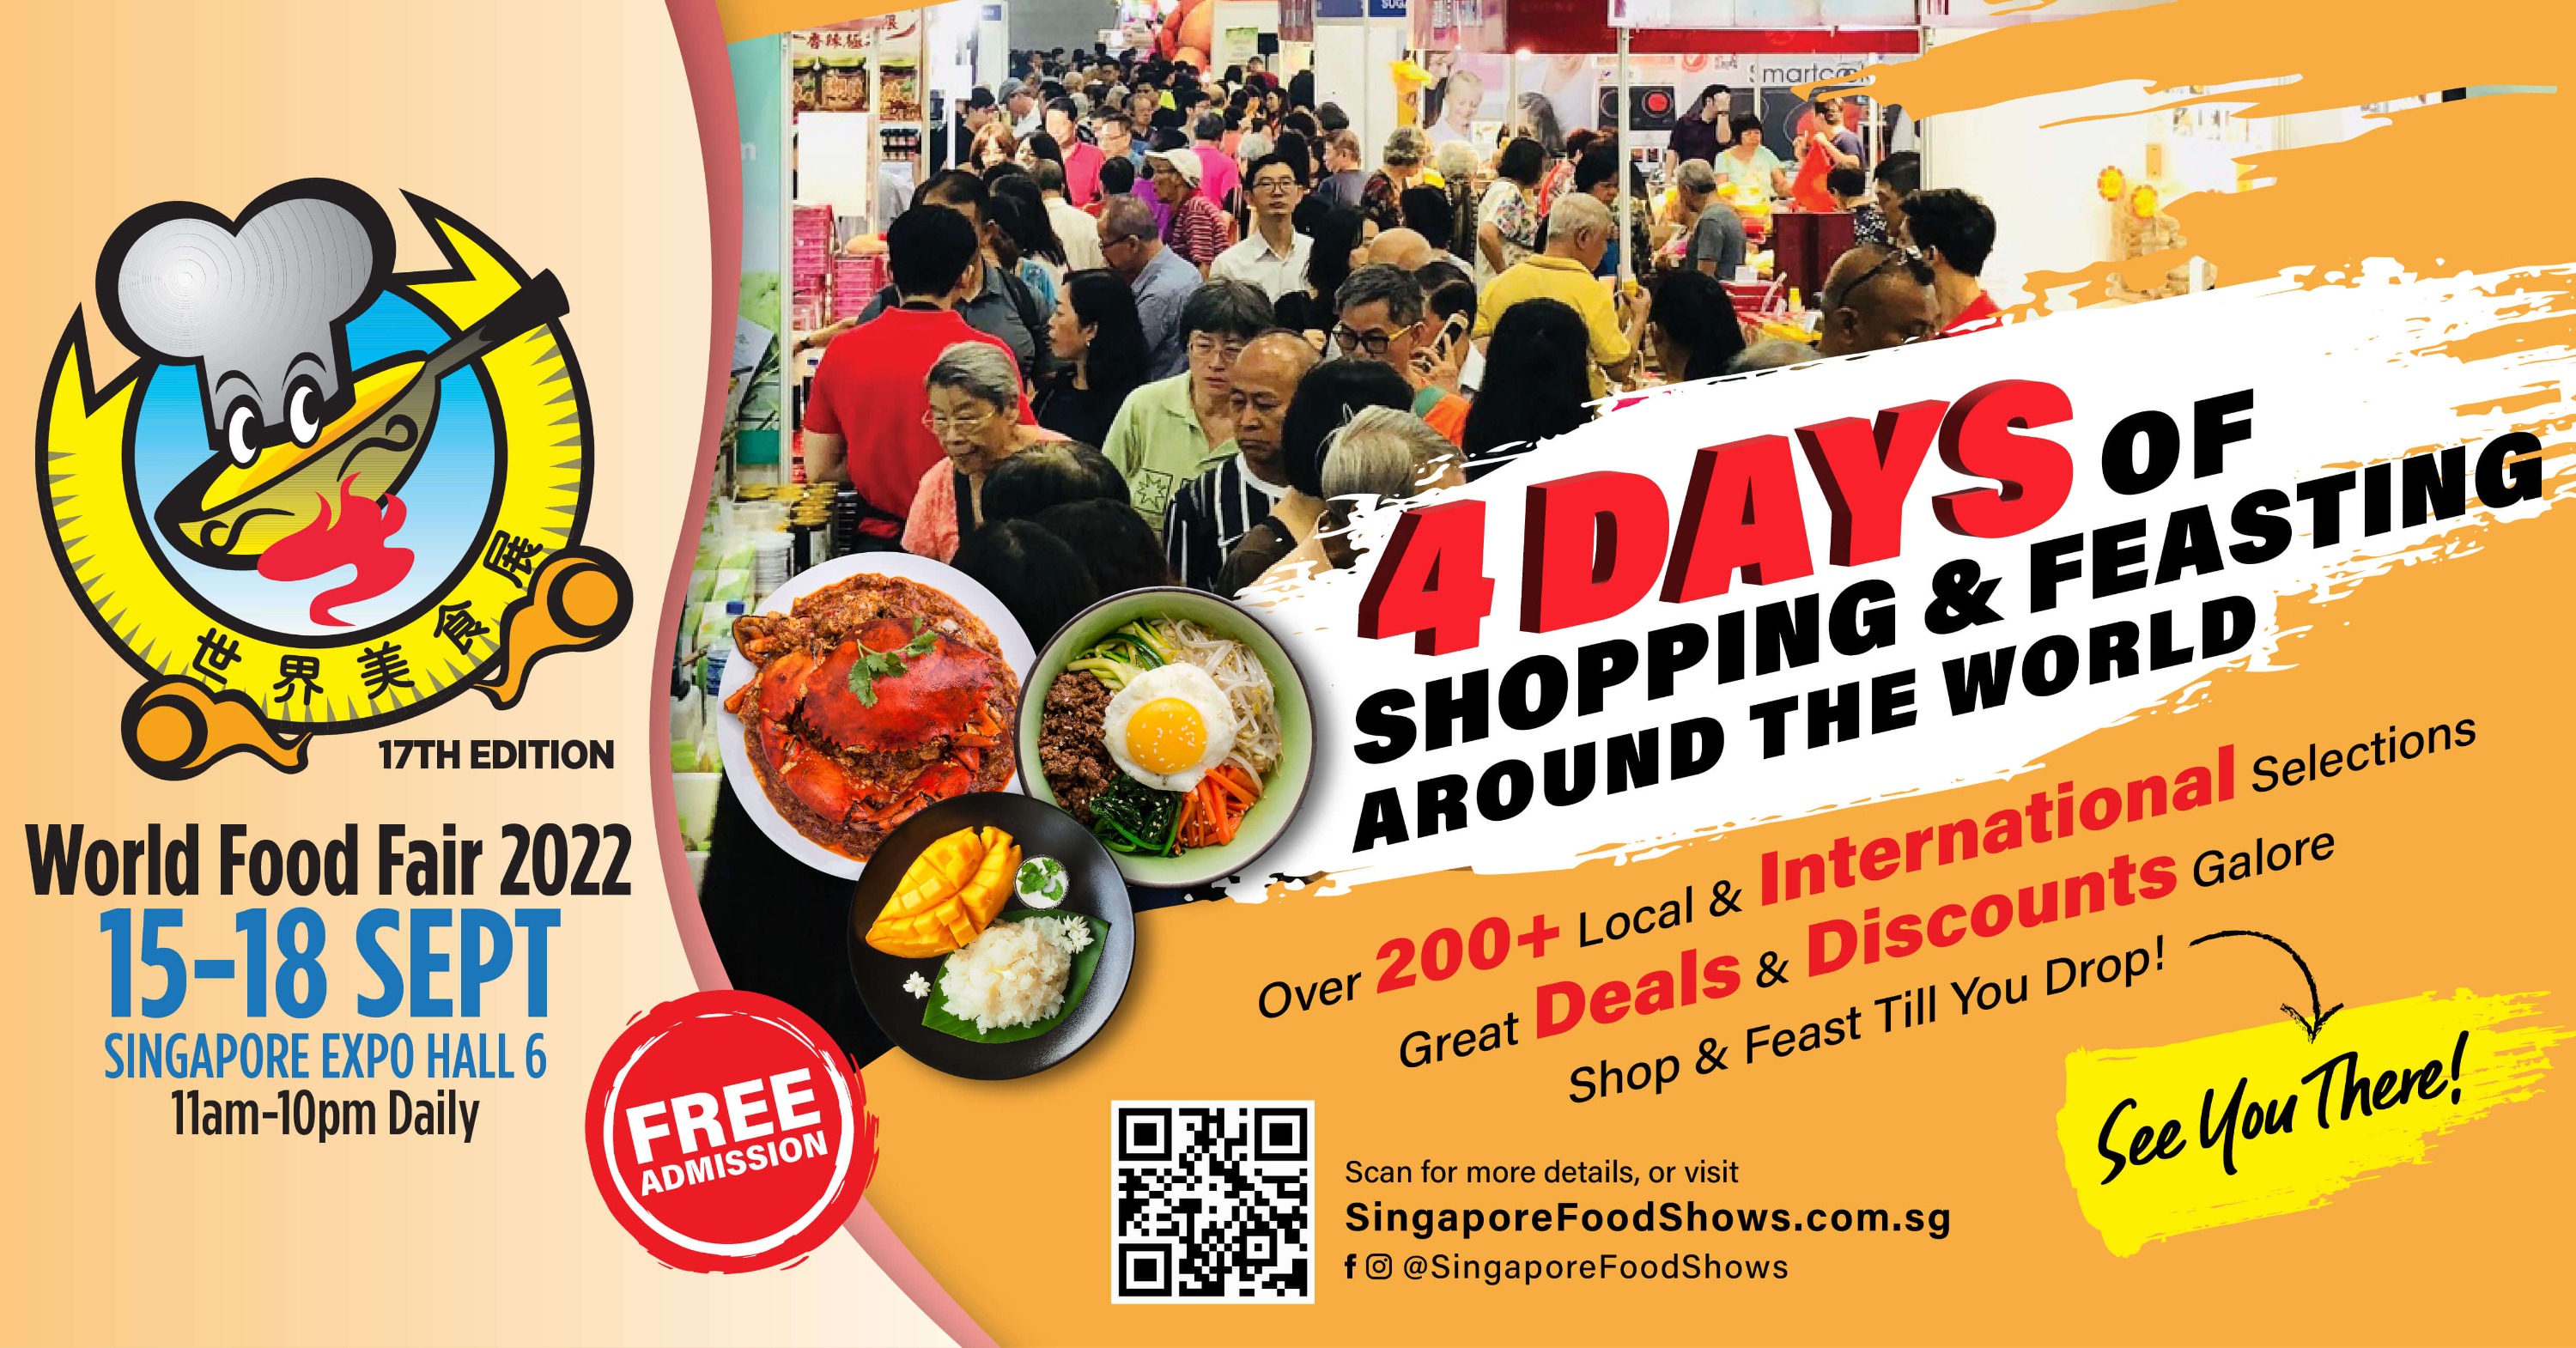 World Food Fair 2022 Singapore Expo